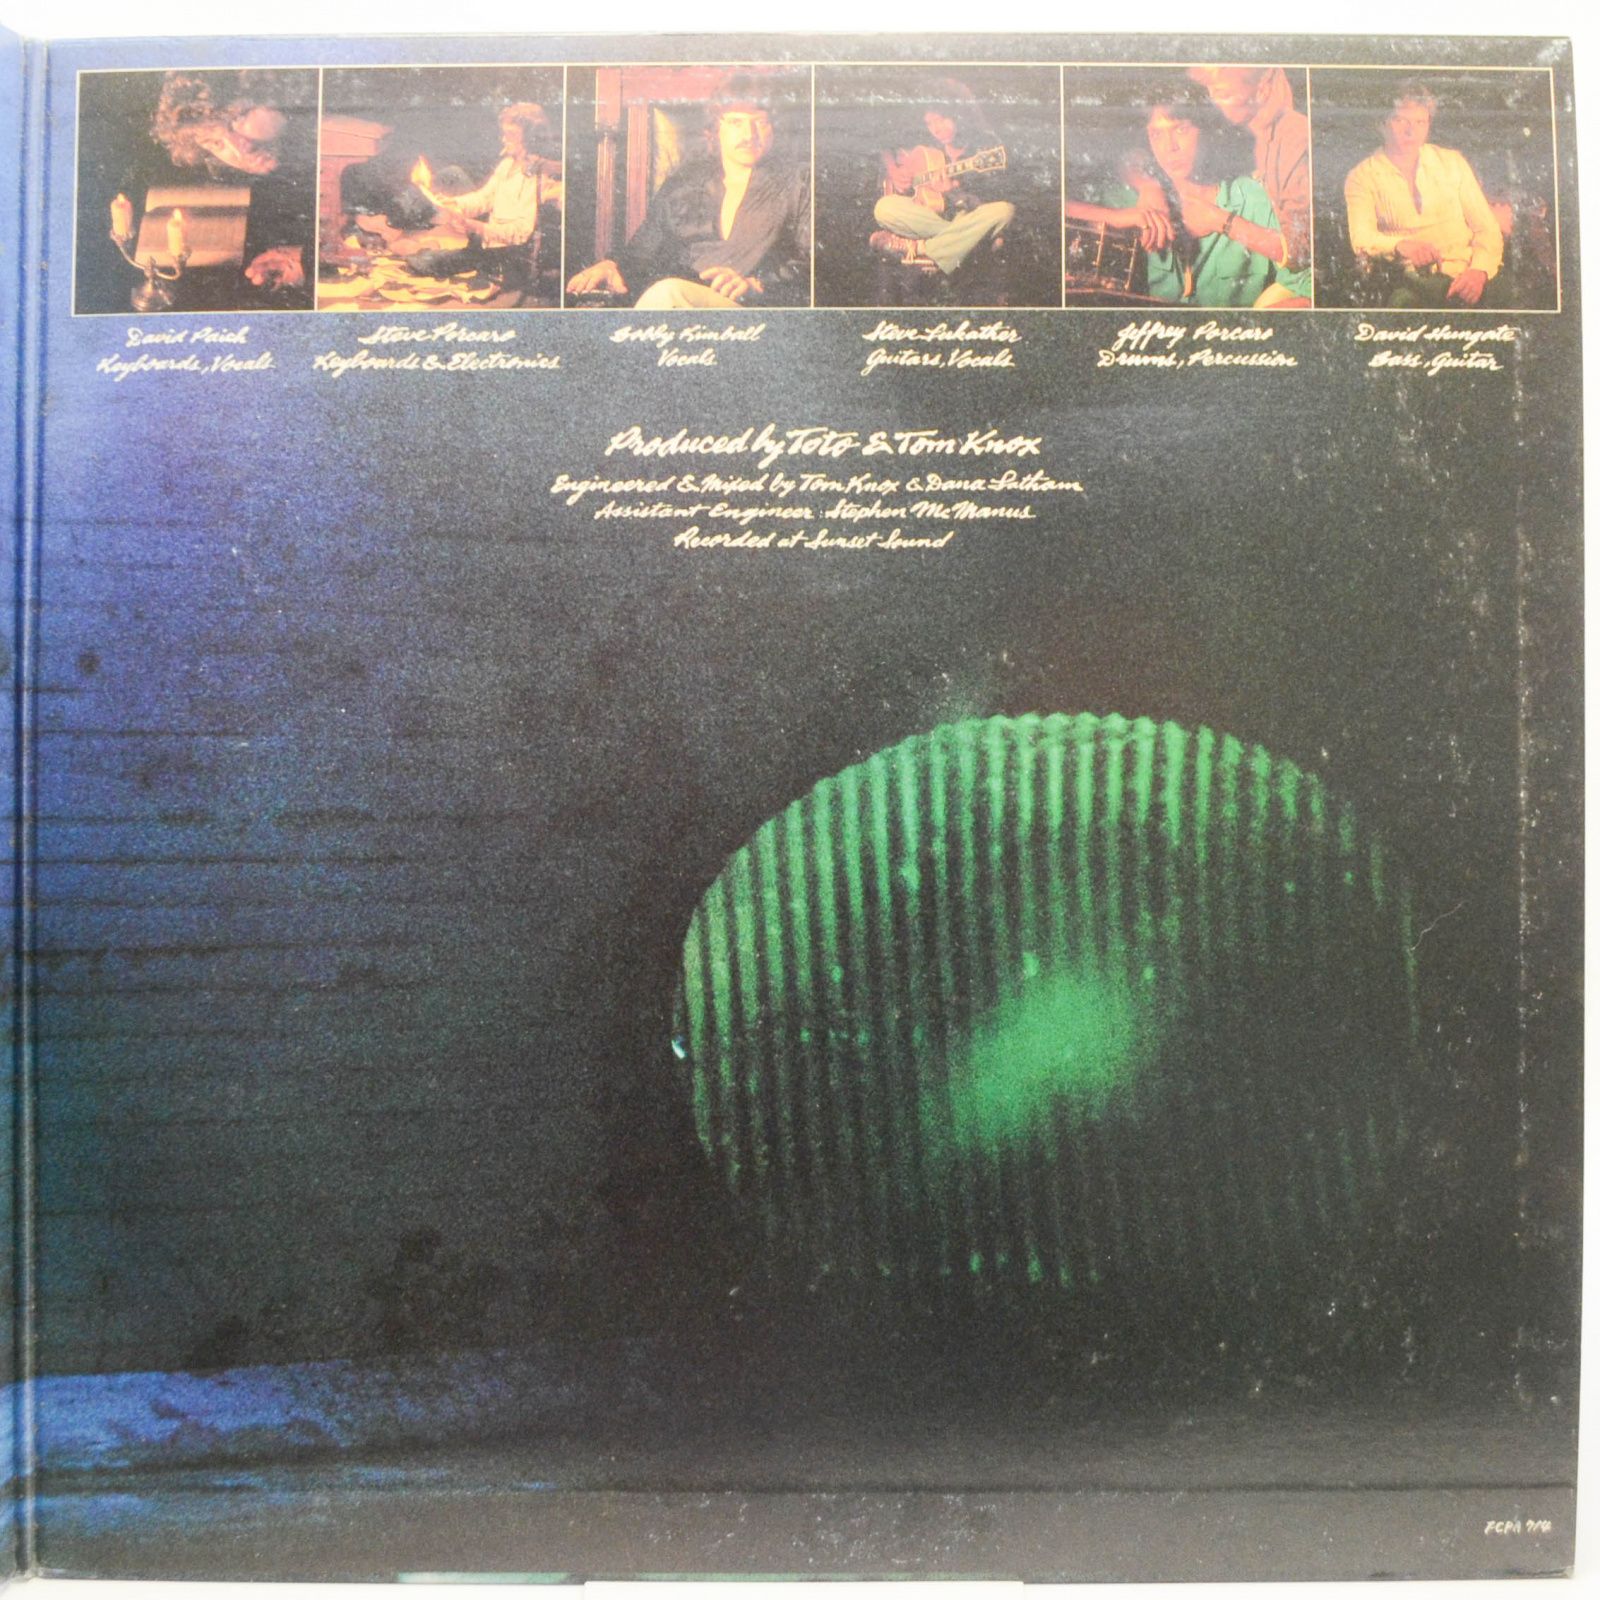 Toto — Hydra, 1979